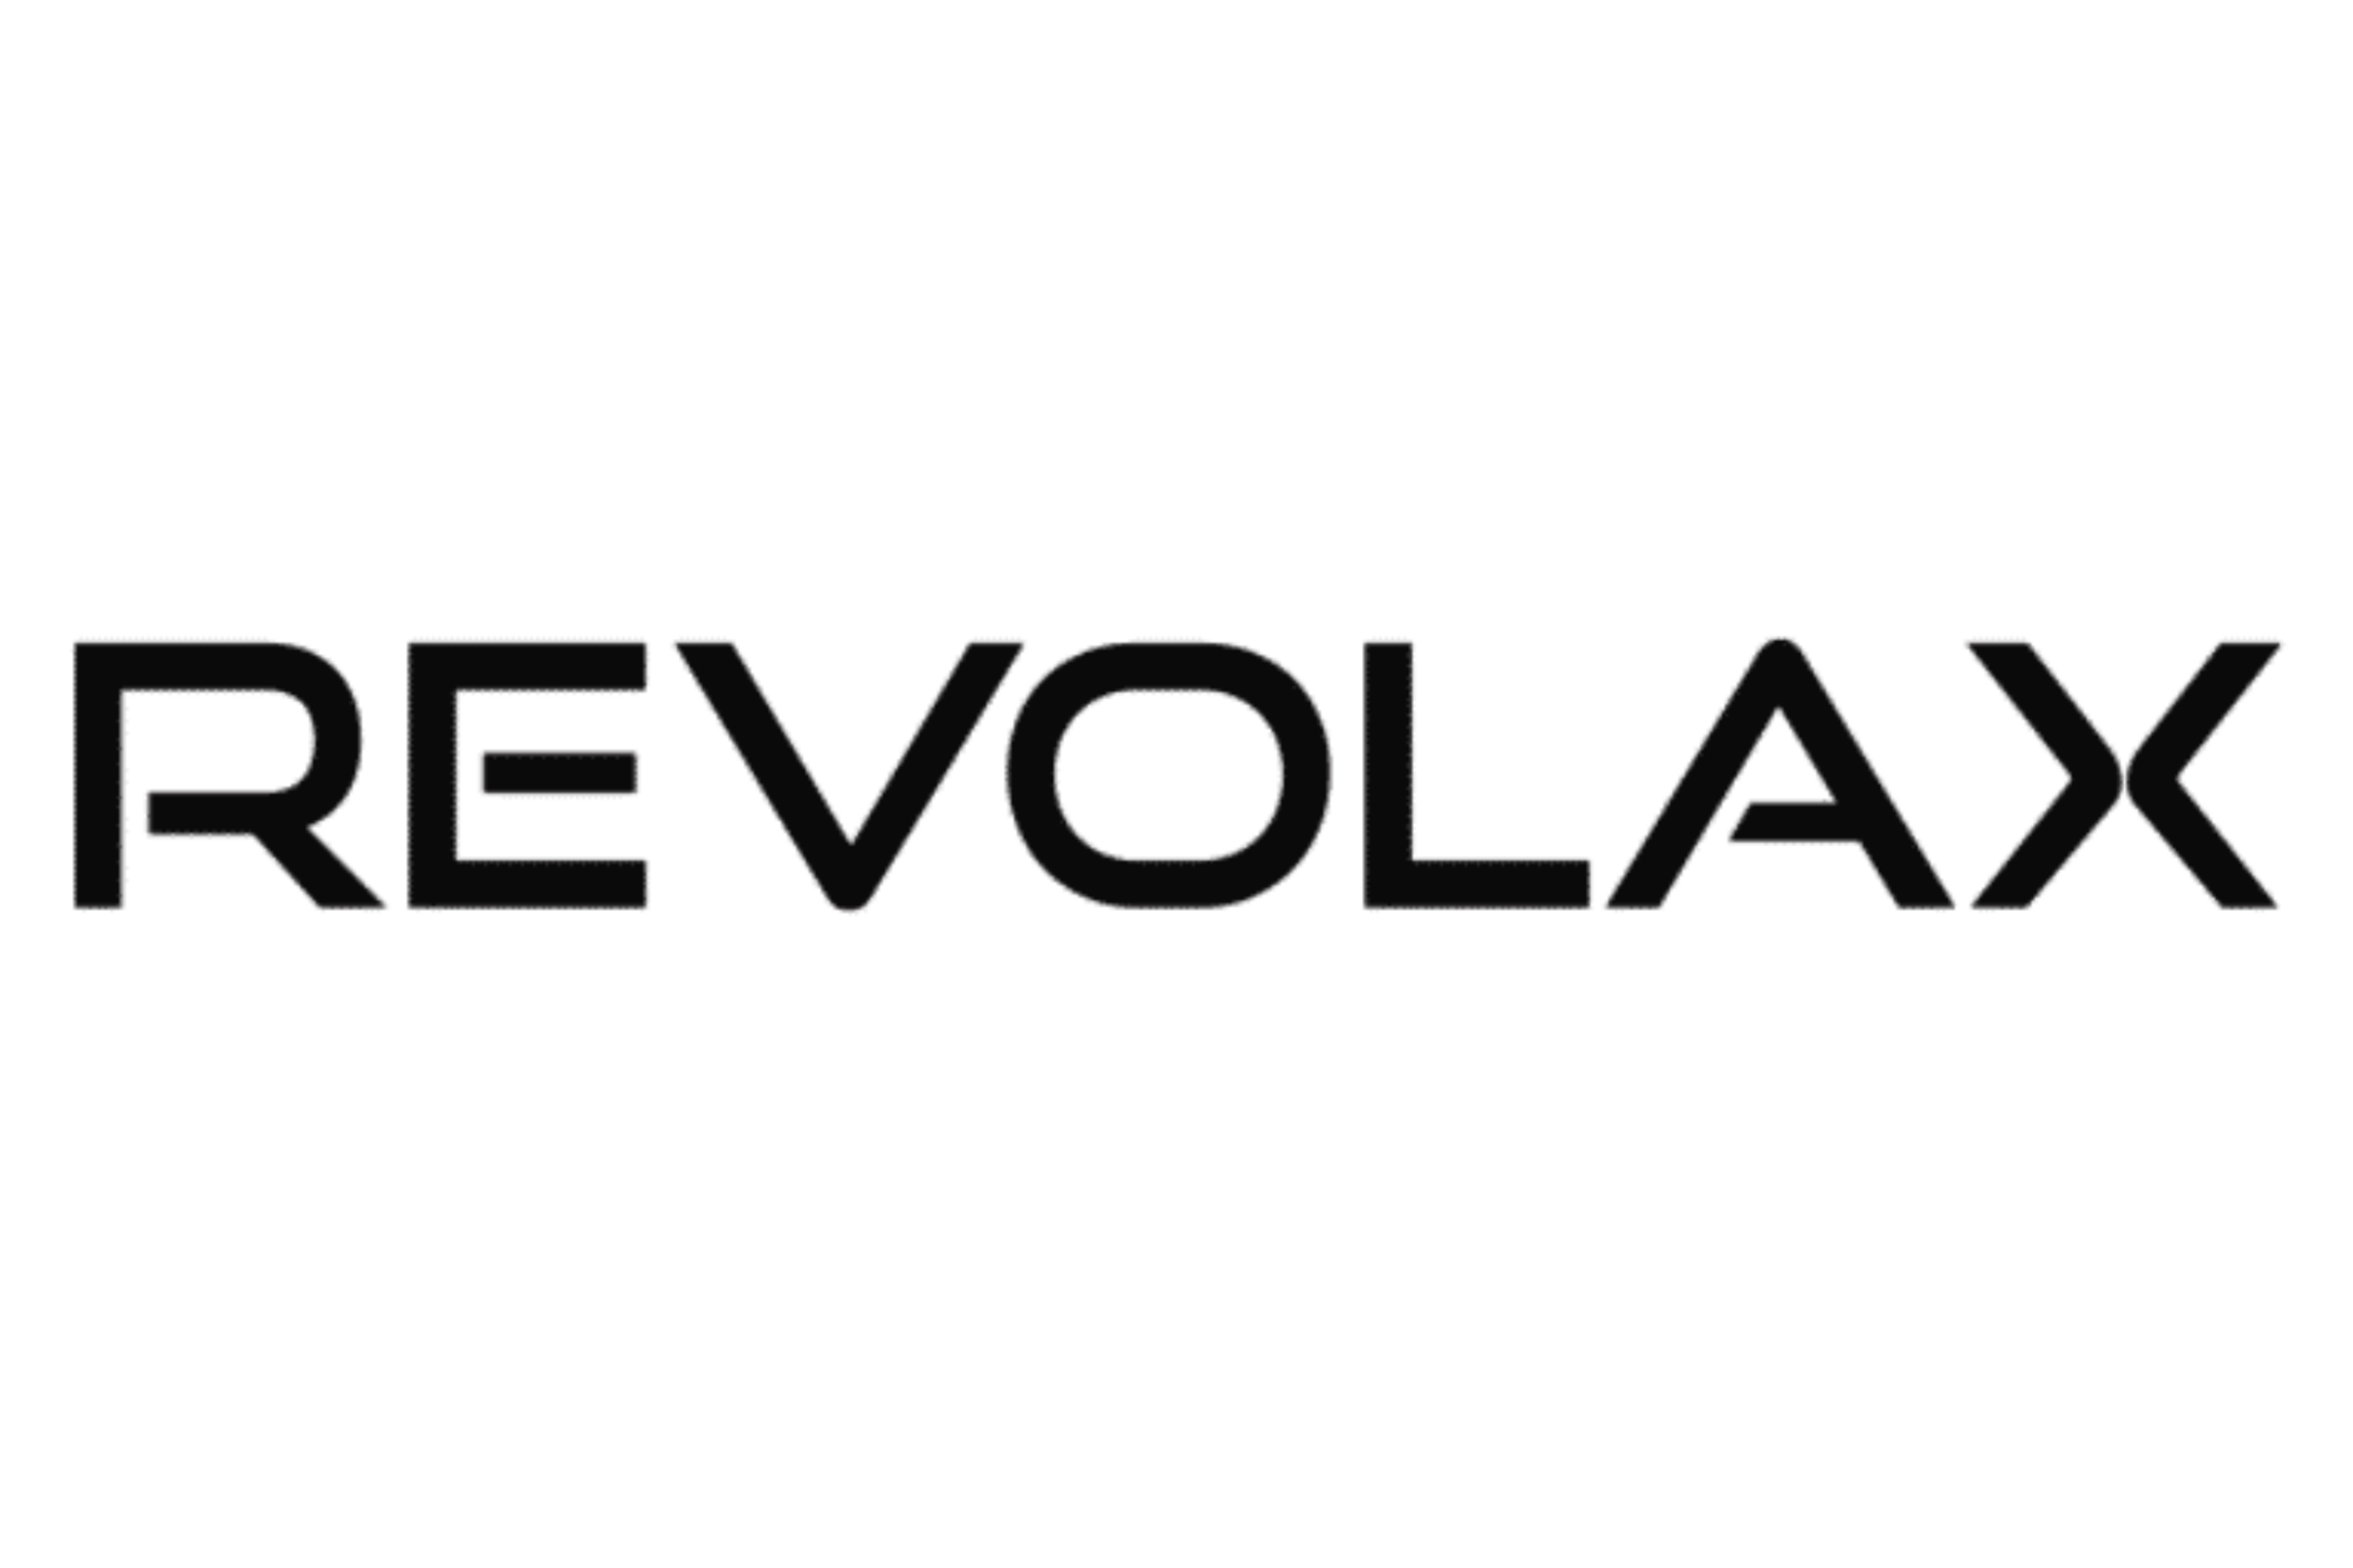 revolax - dermal filler - brands we use - bellucci aesthetics london clinic